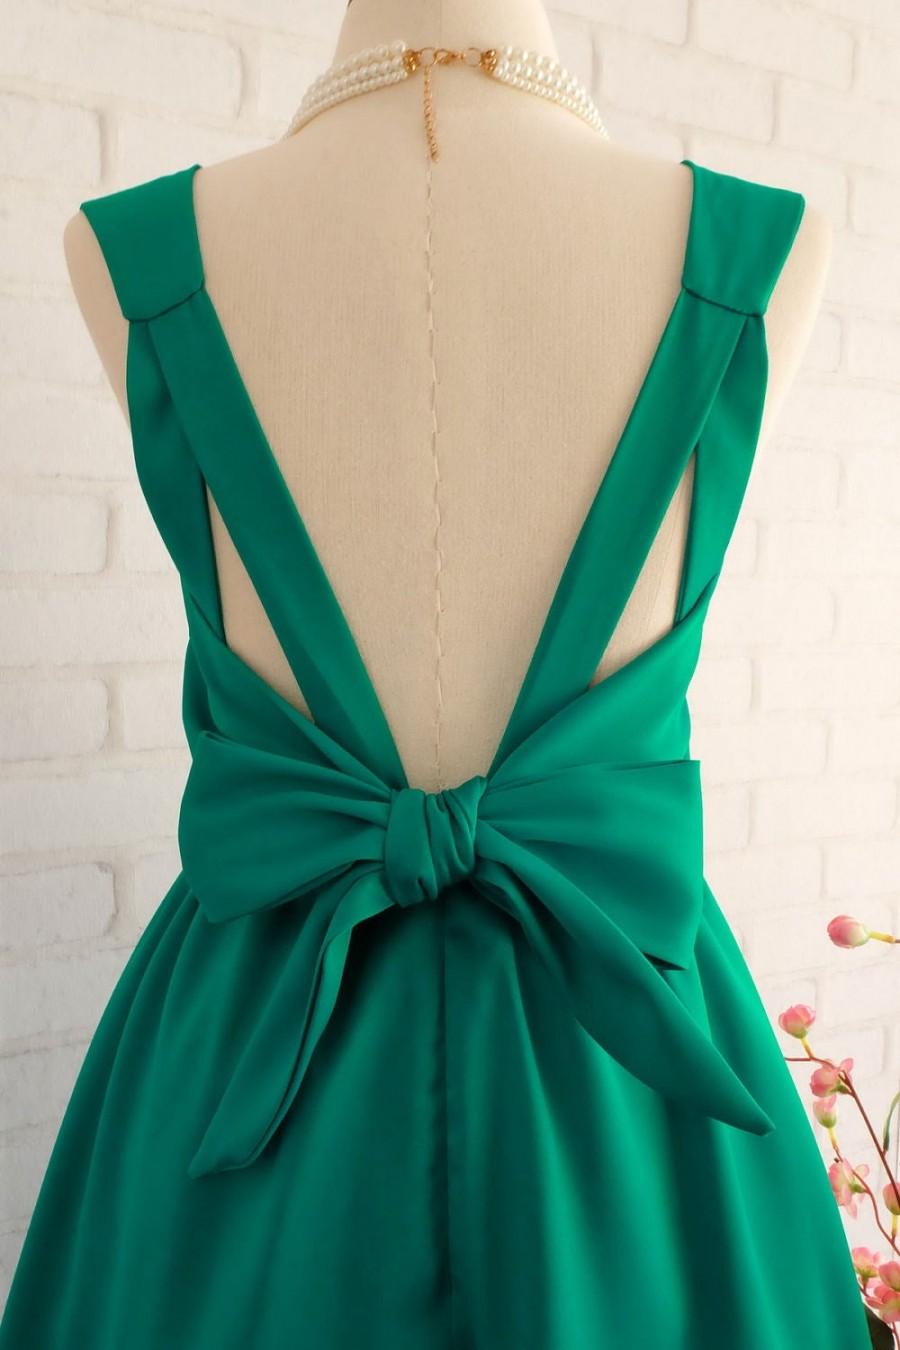 زفاف - Emerald Green dress green Bridesmaid dress Wedding Prom dress Cocktail Party dress Evening dress Backless bow dress